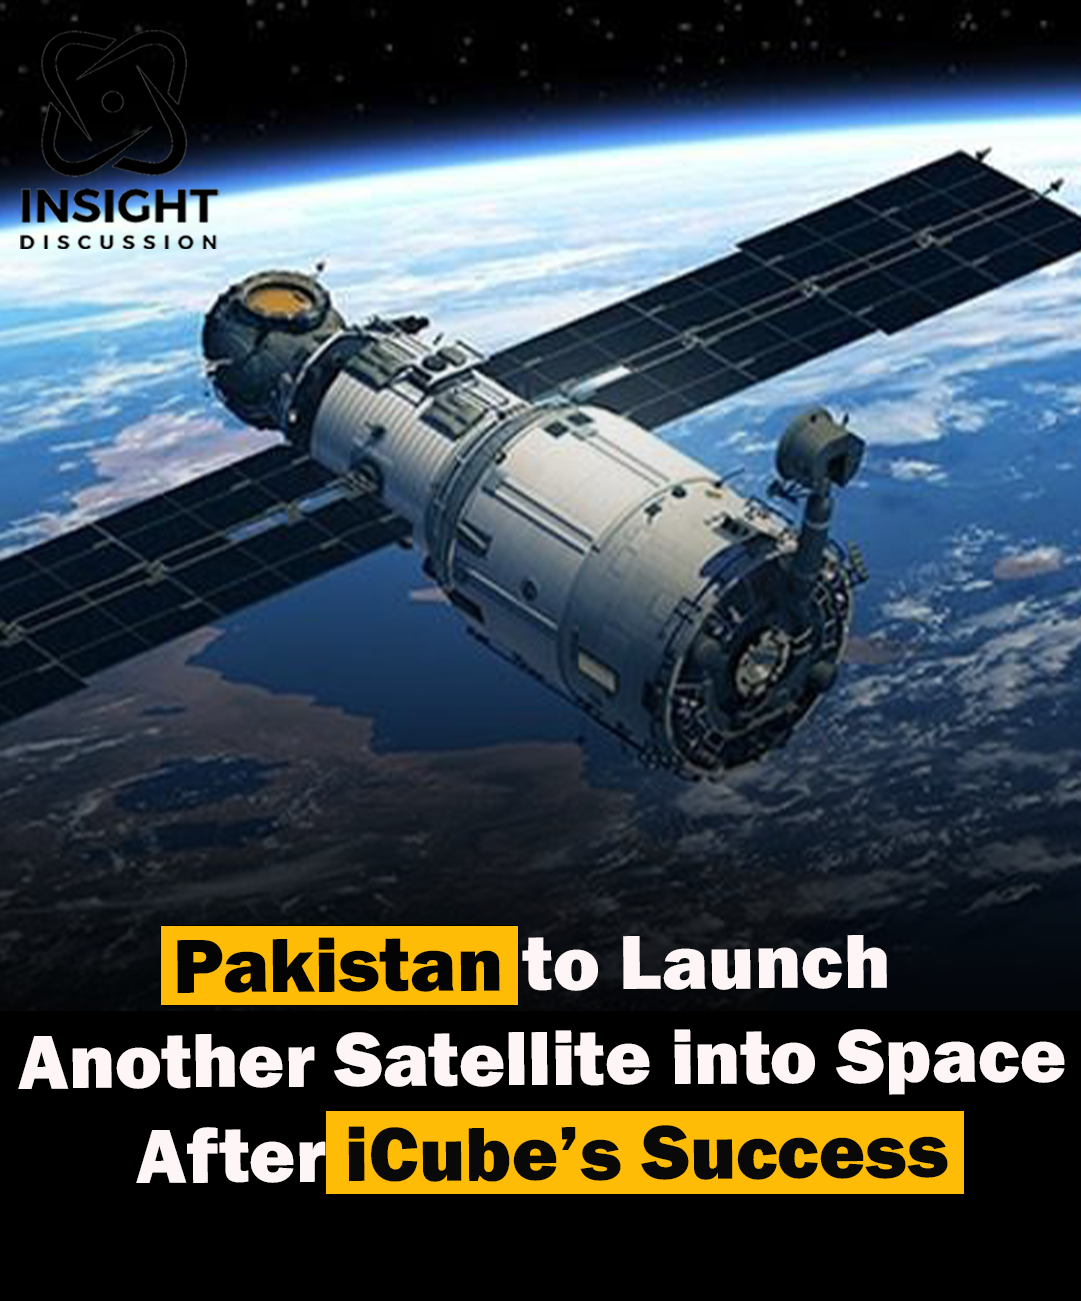 Pakistan’s Satellite Advancements MM1 Launch and iCUBE’s Lunar Mission